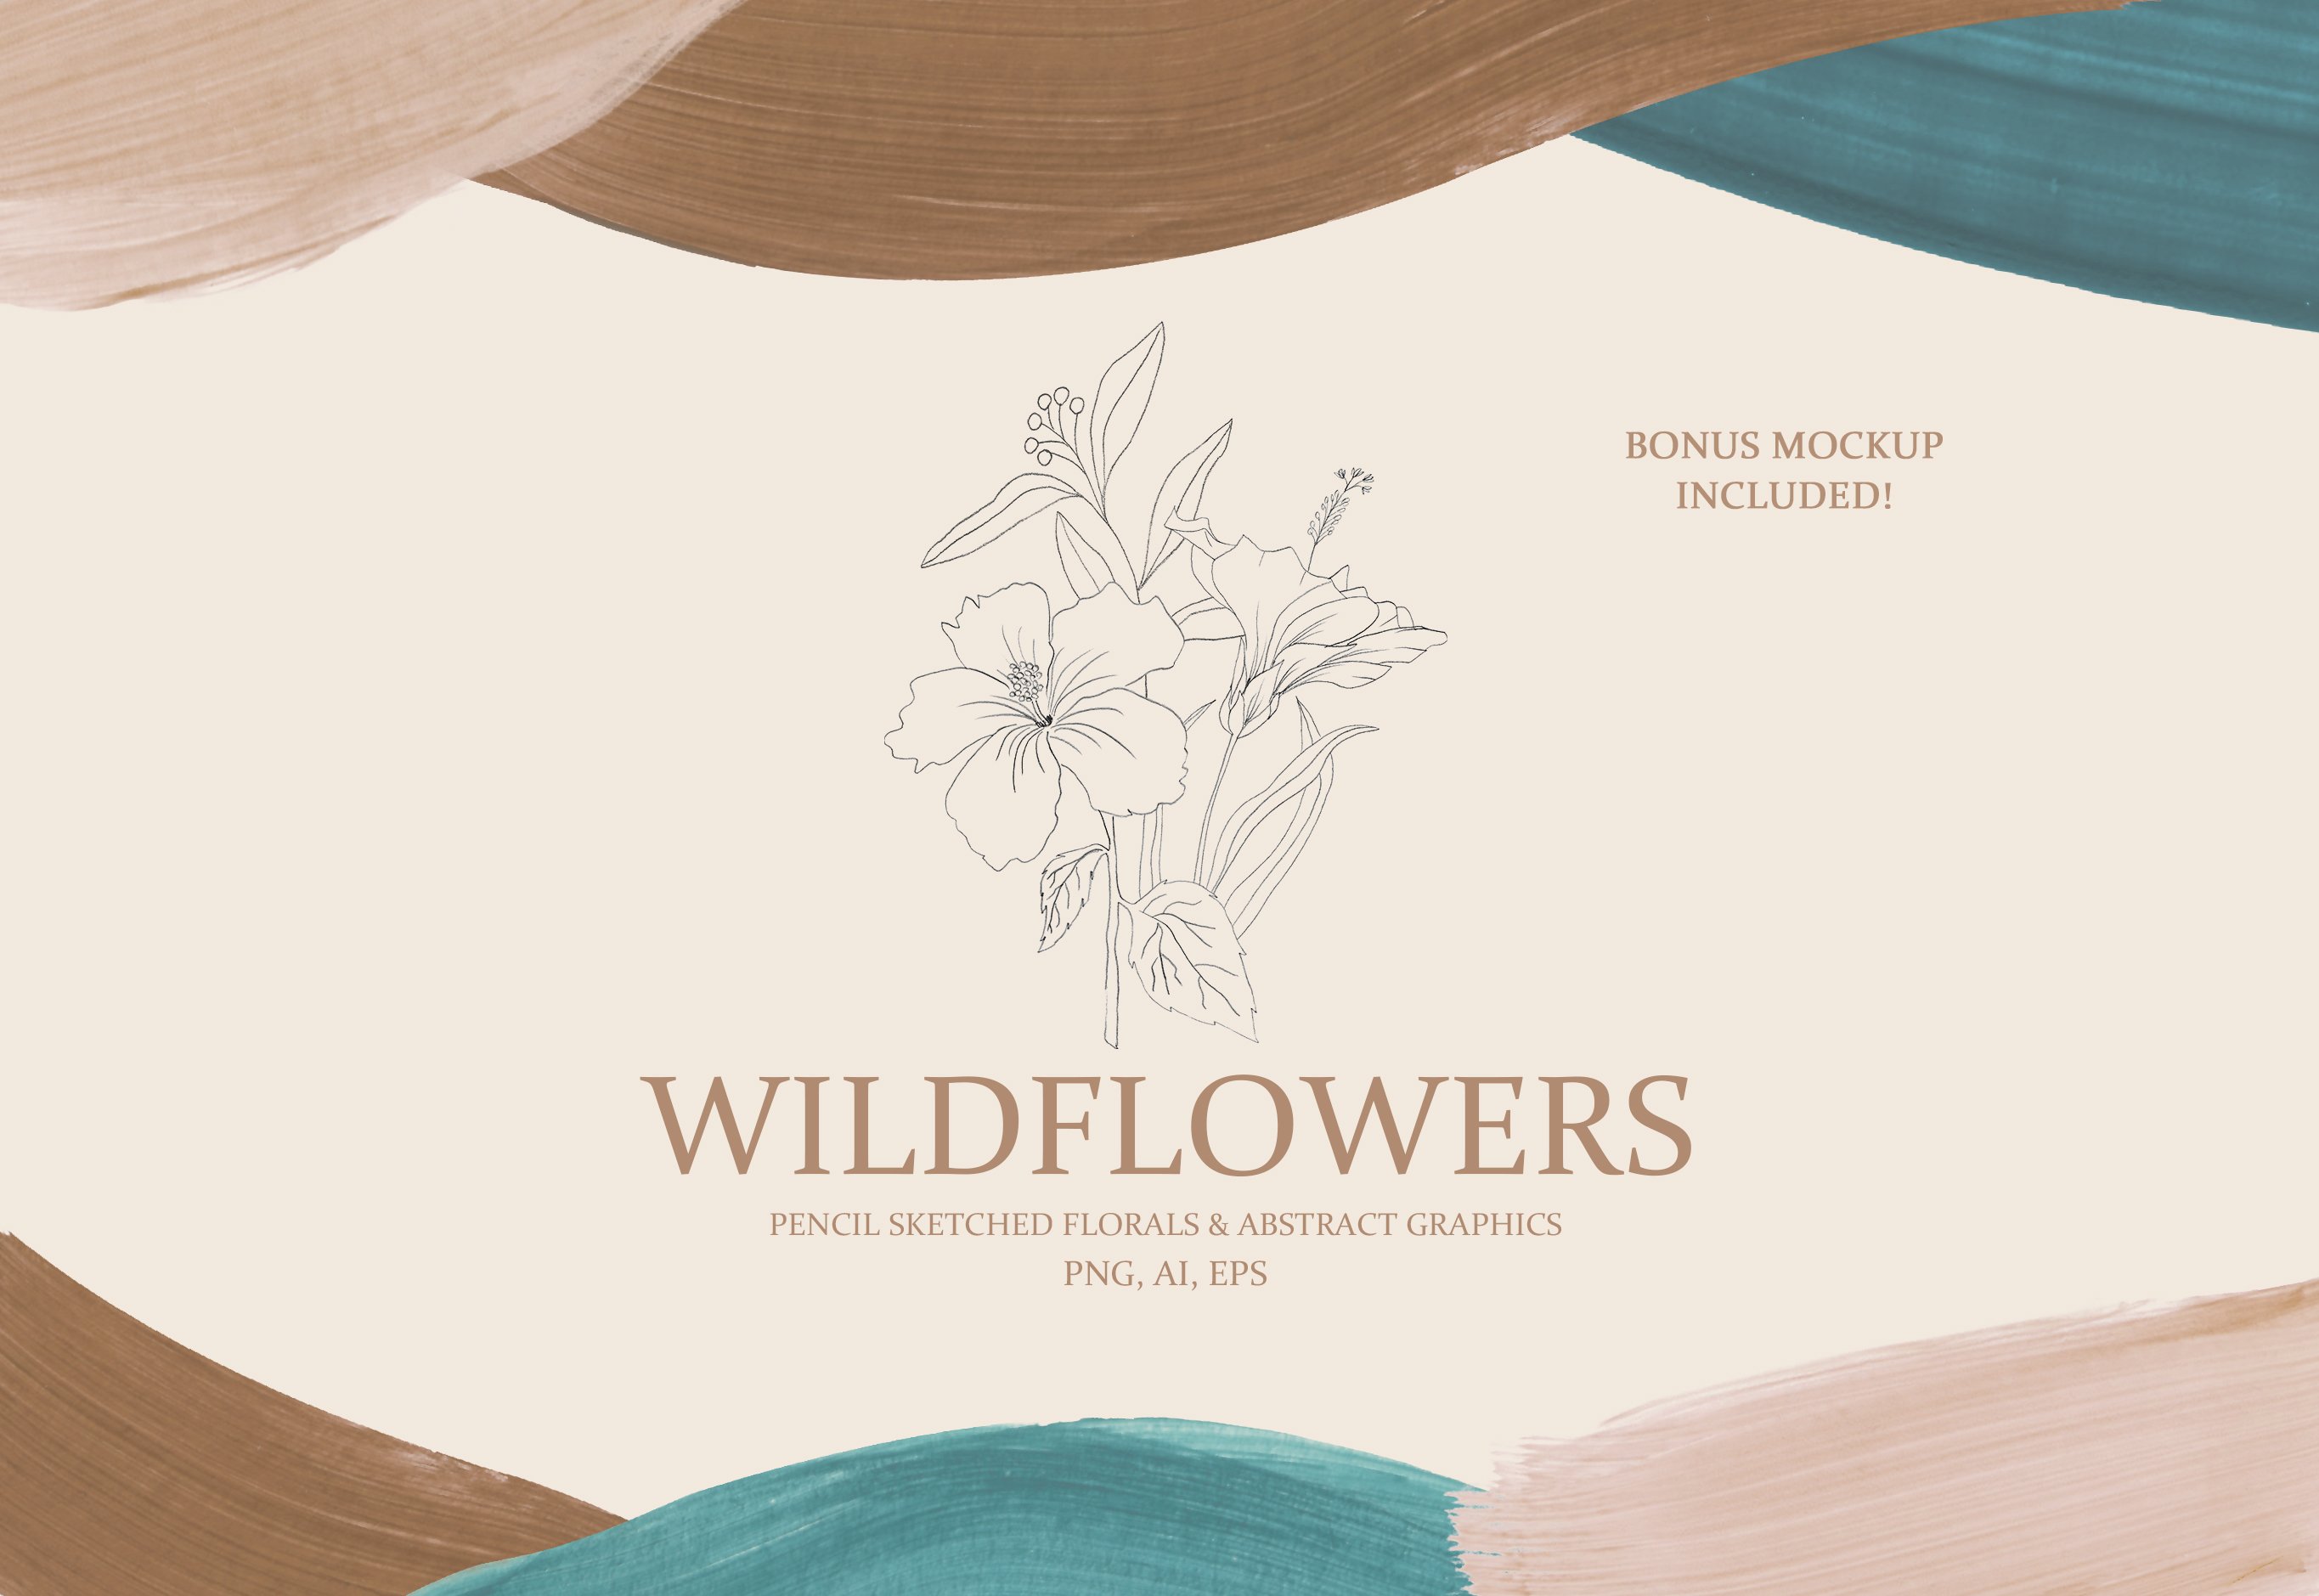 19 wildflowers1 920